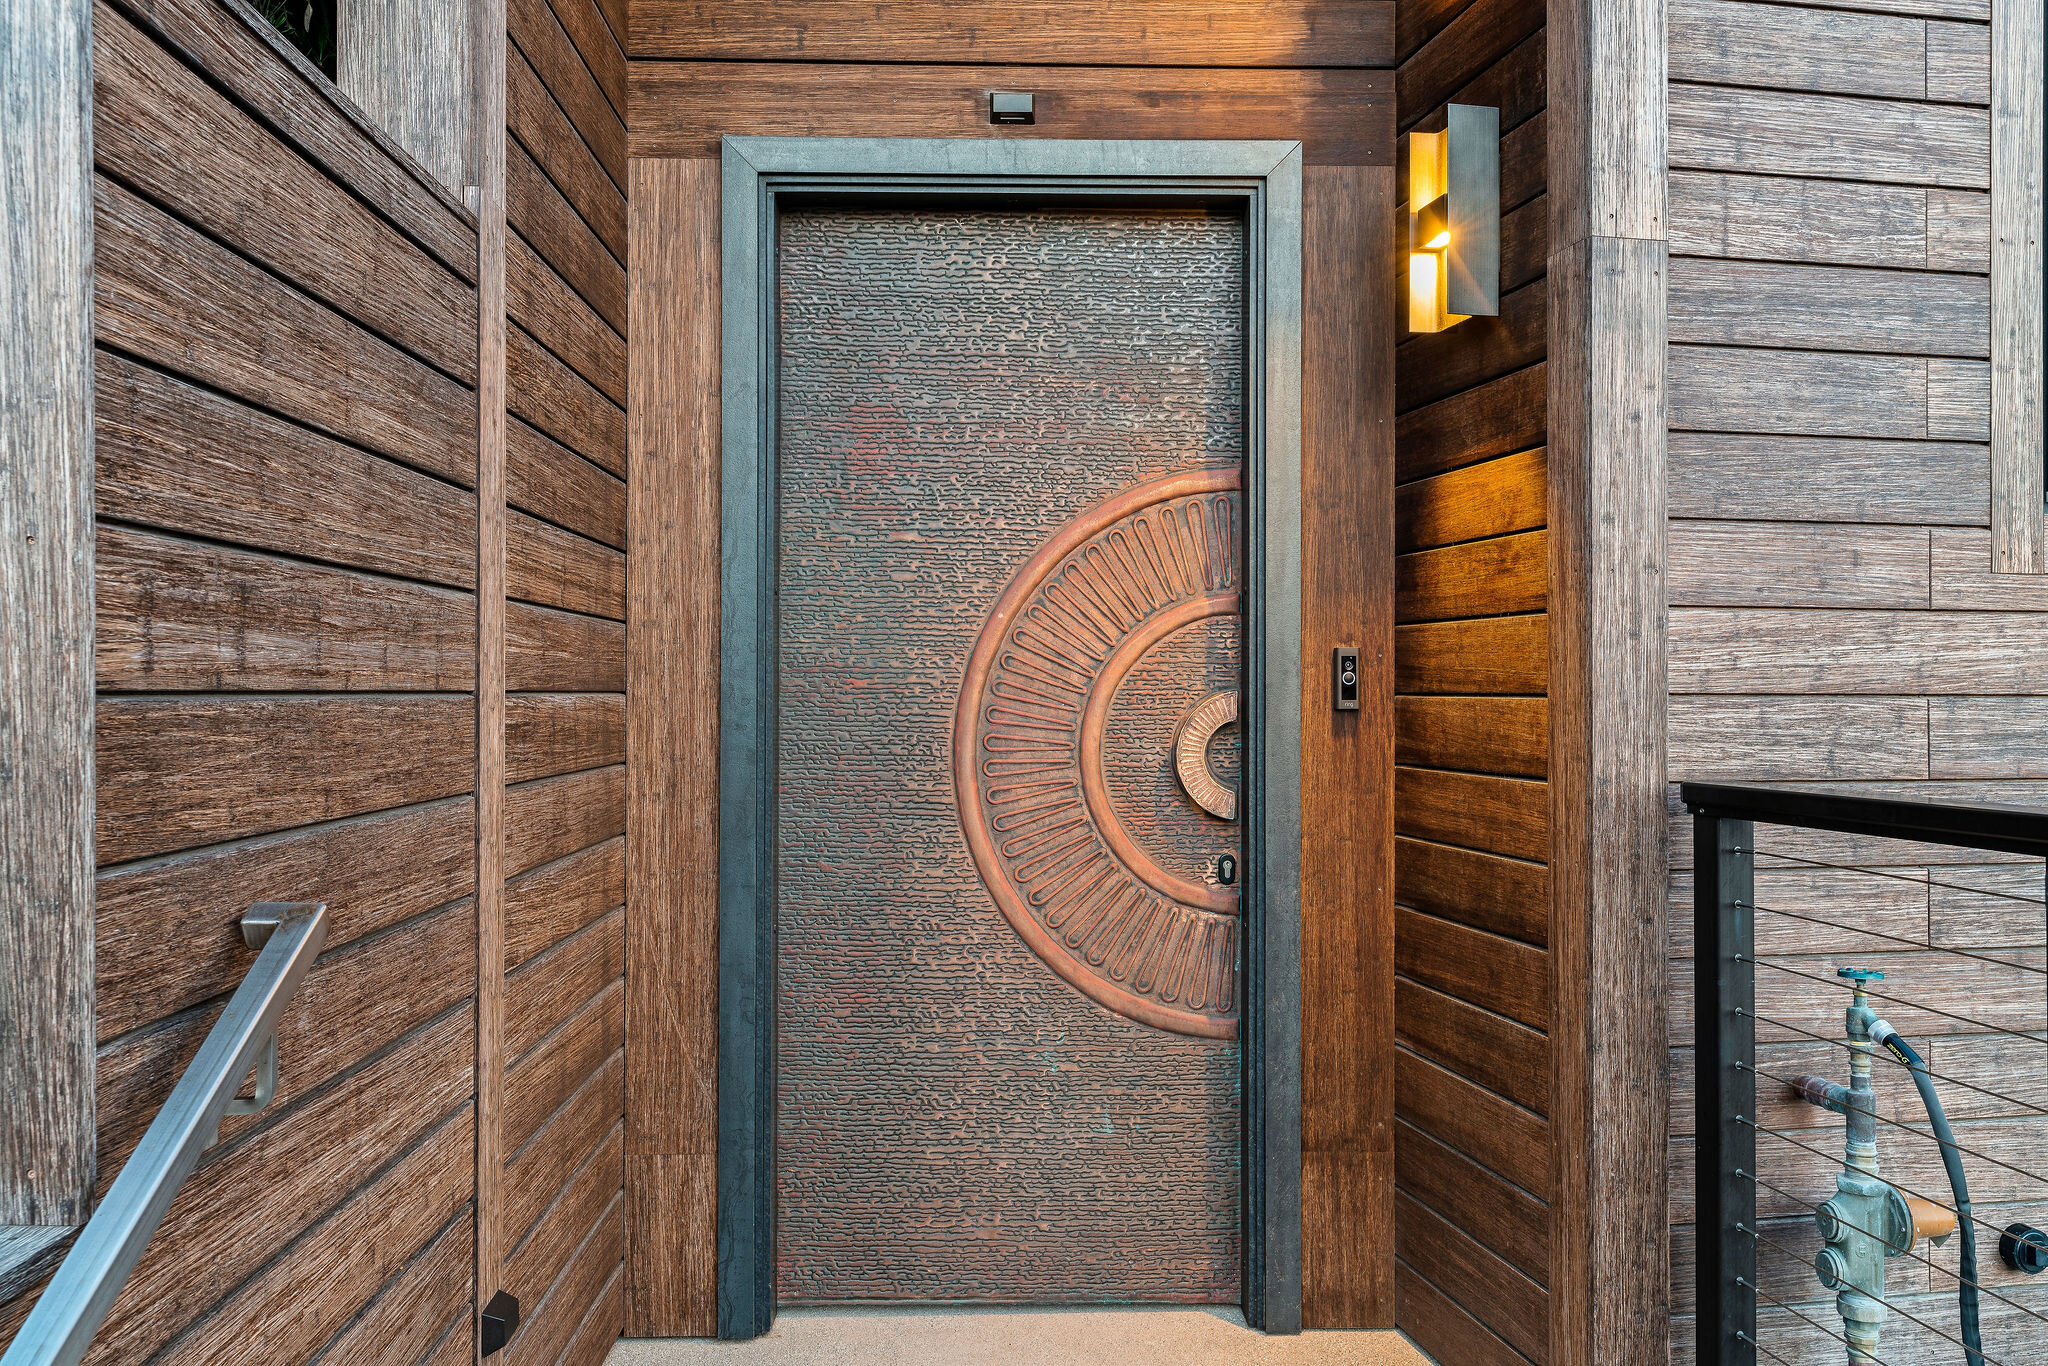 Dine Copper door by Aluminr | California Beach House